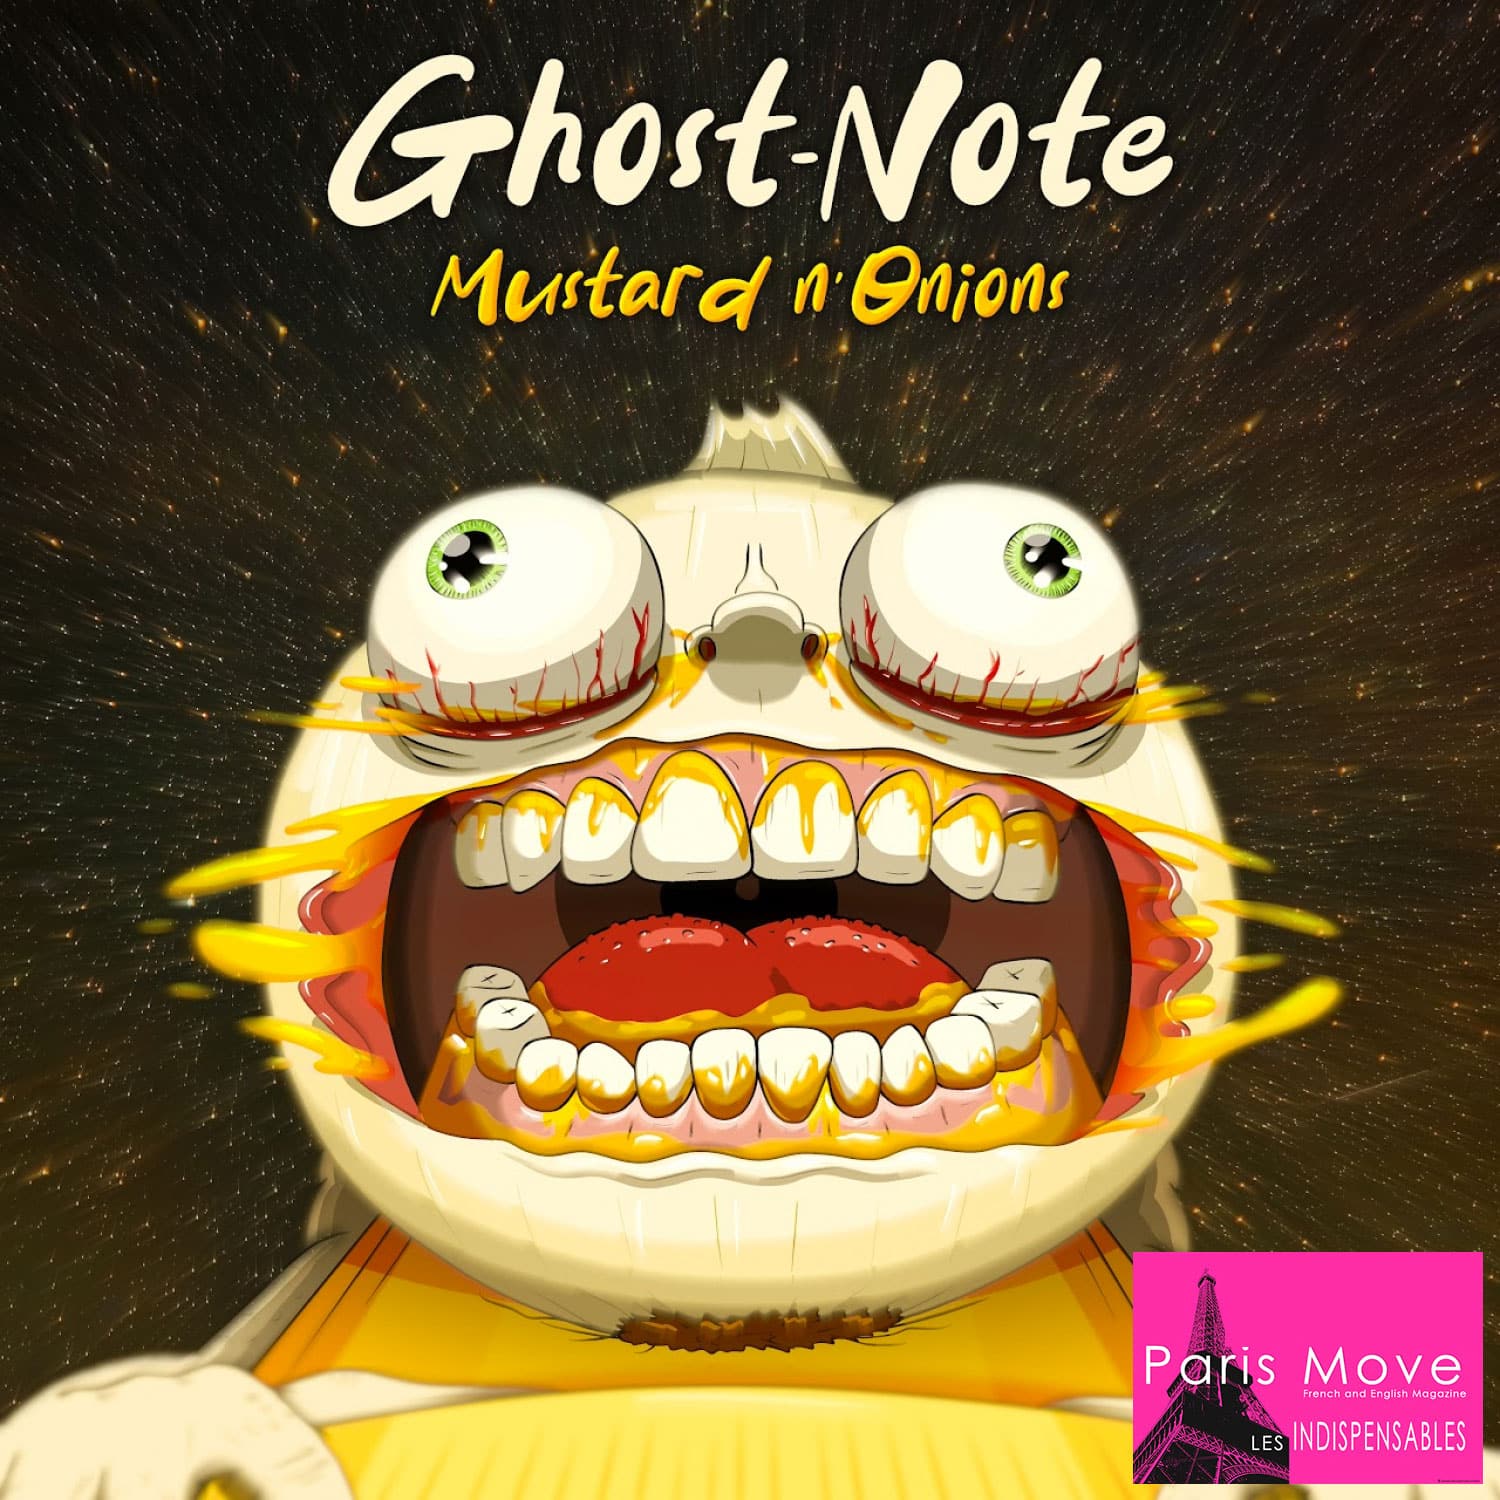 Ghost-Note - Mustard n' Onions